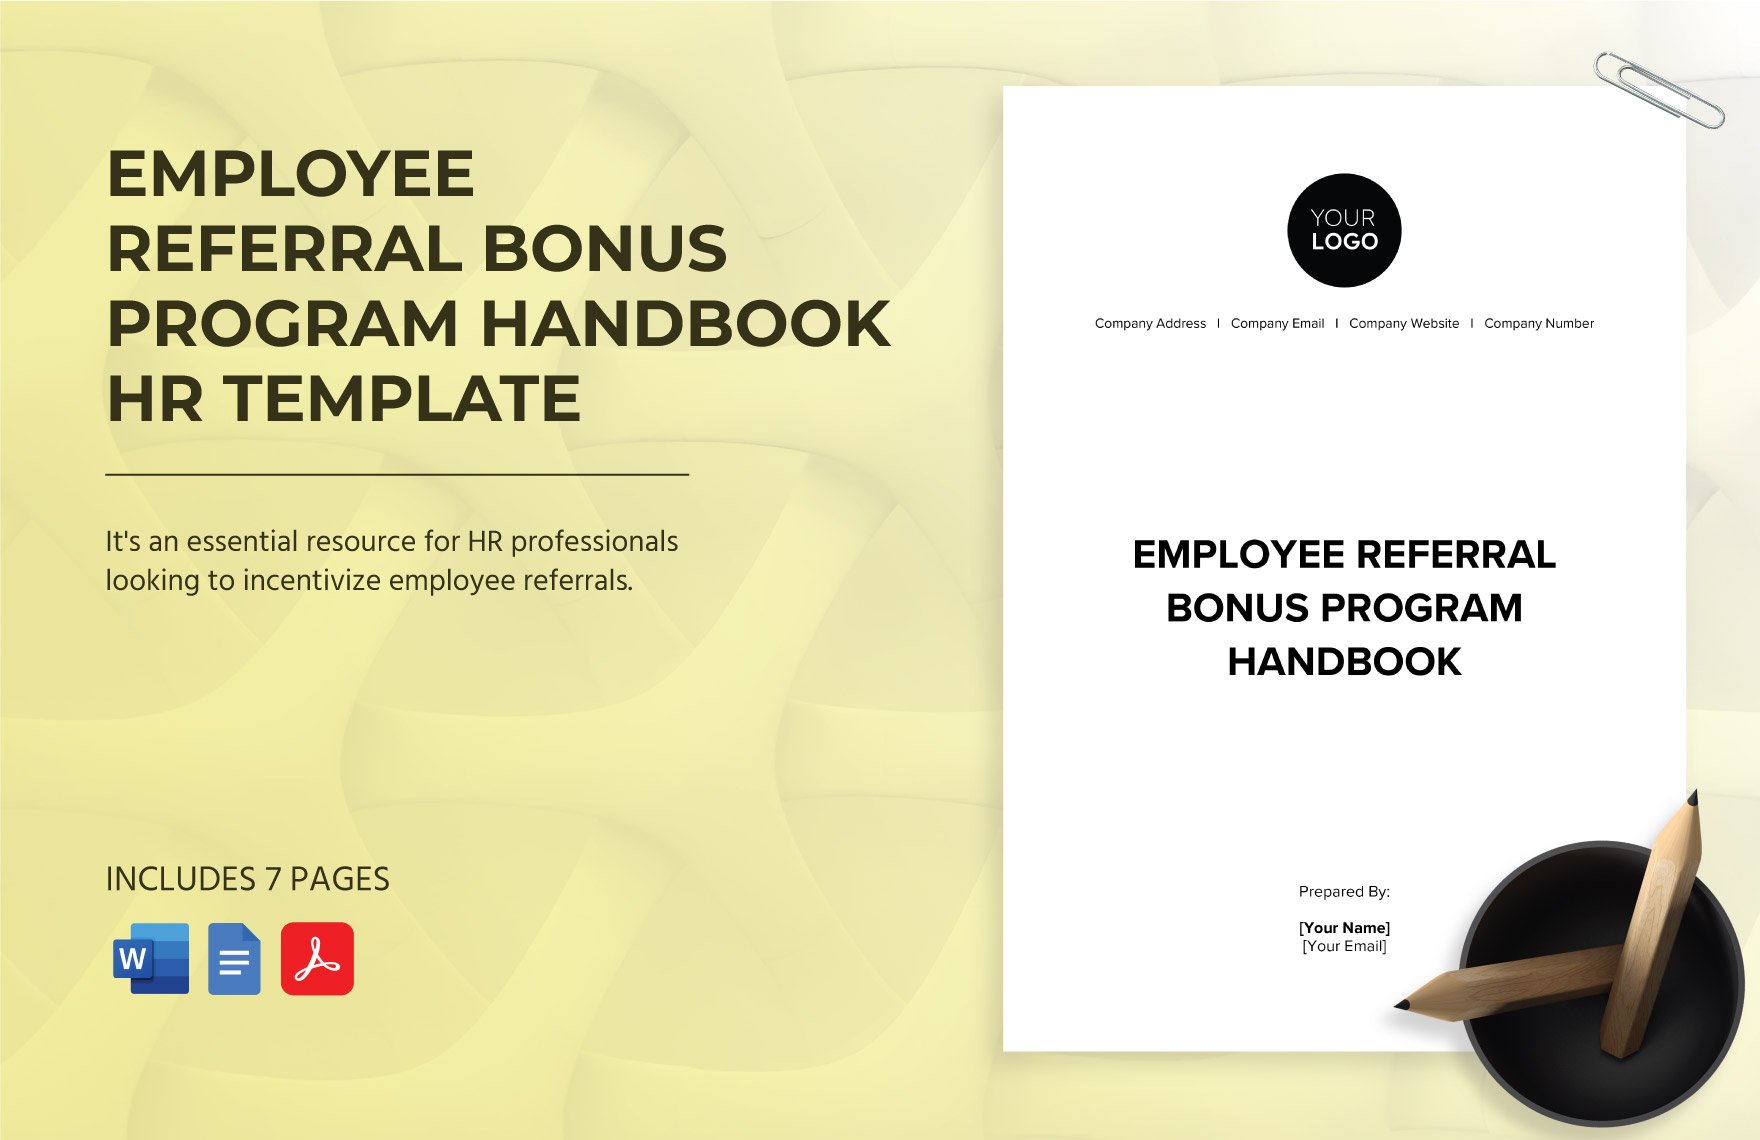 Employee Referral Bonus Program Handbook HR Template